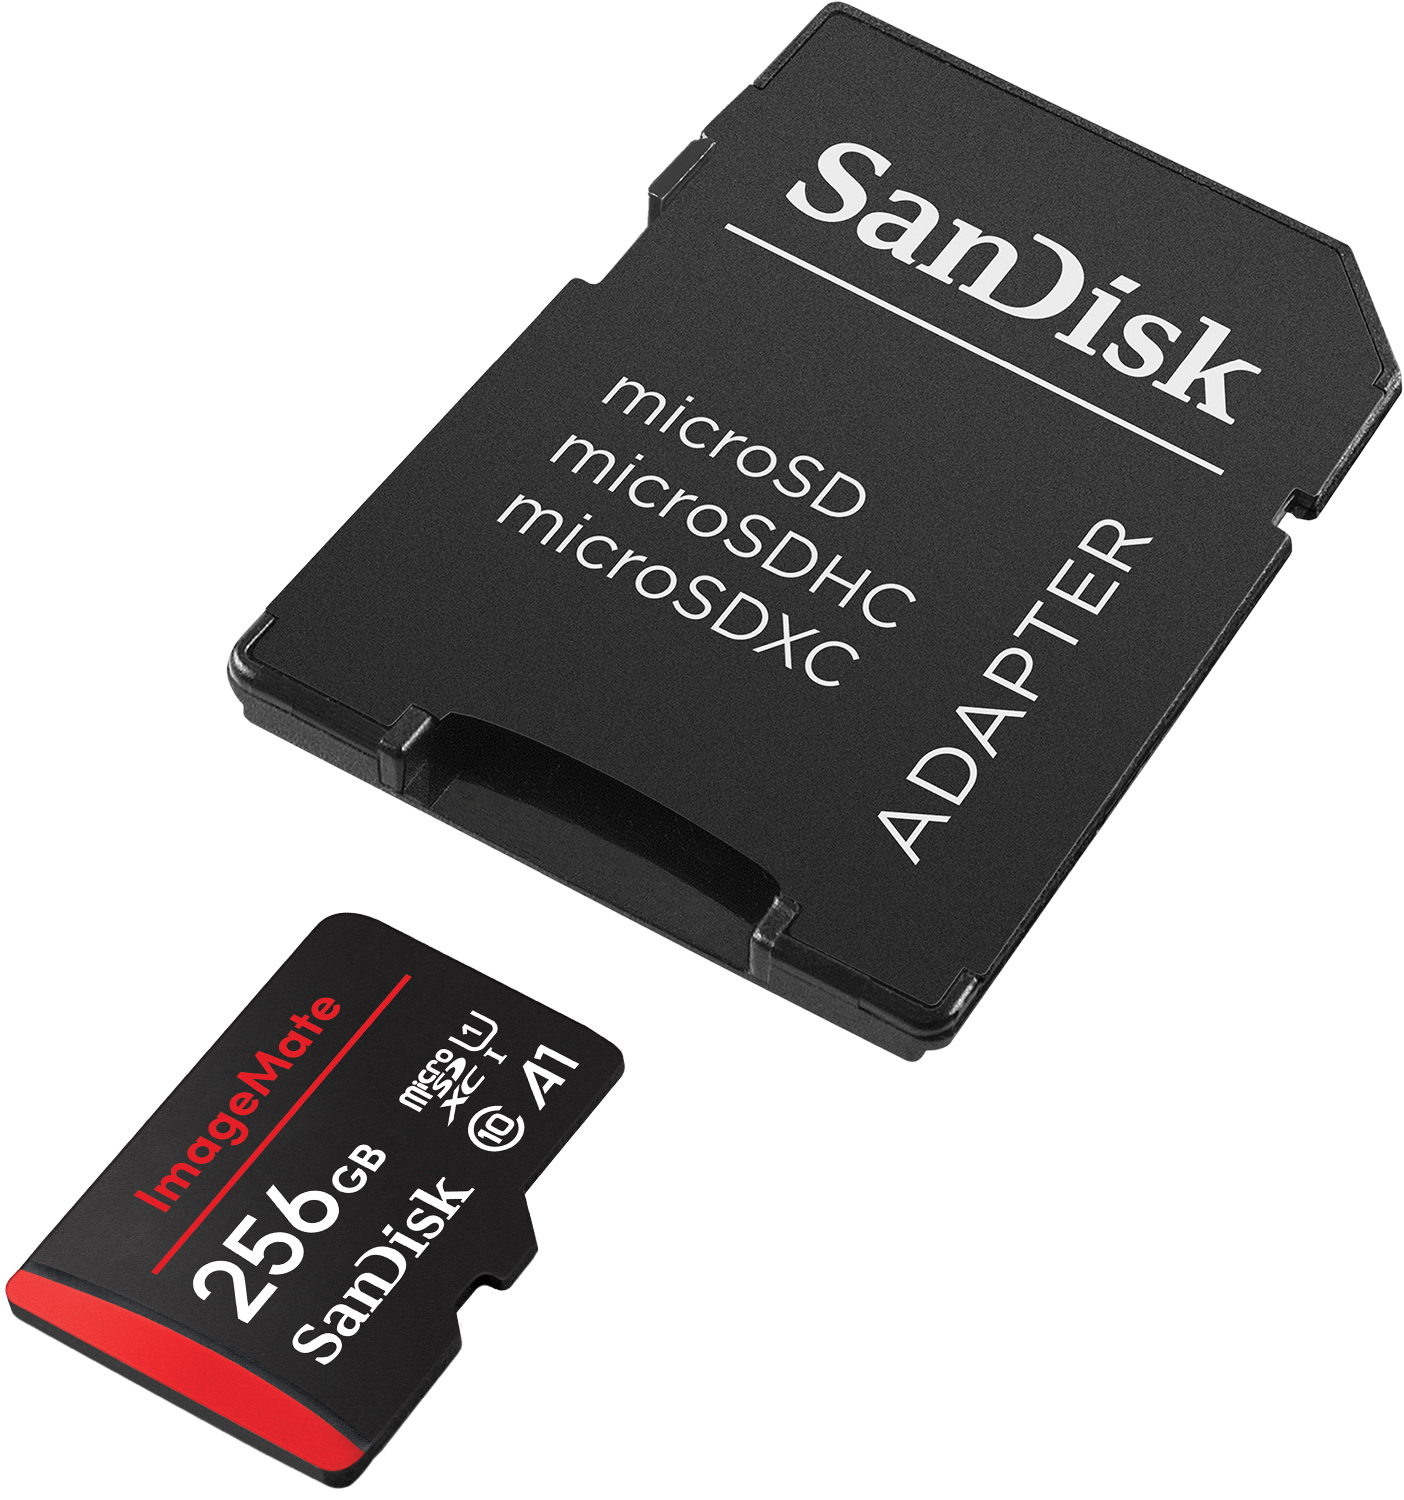 SanDisk 256GB ImageMate microSDXC UHS-I Memory Card - Up to 150MB/s - SDSQUA4-256G-Aw6ka - image 3 of 7